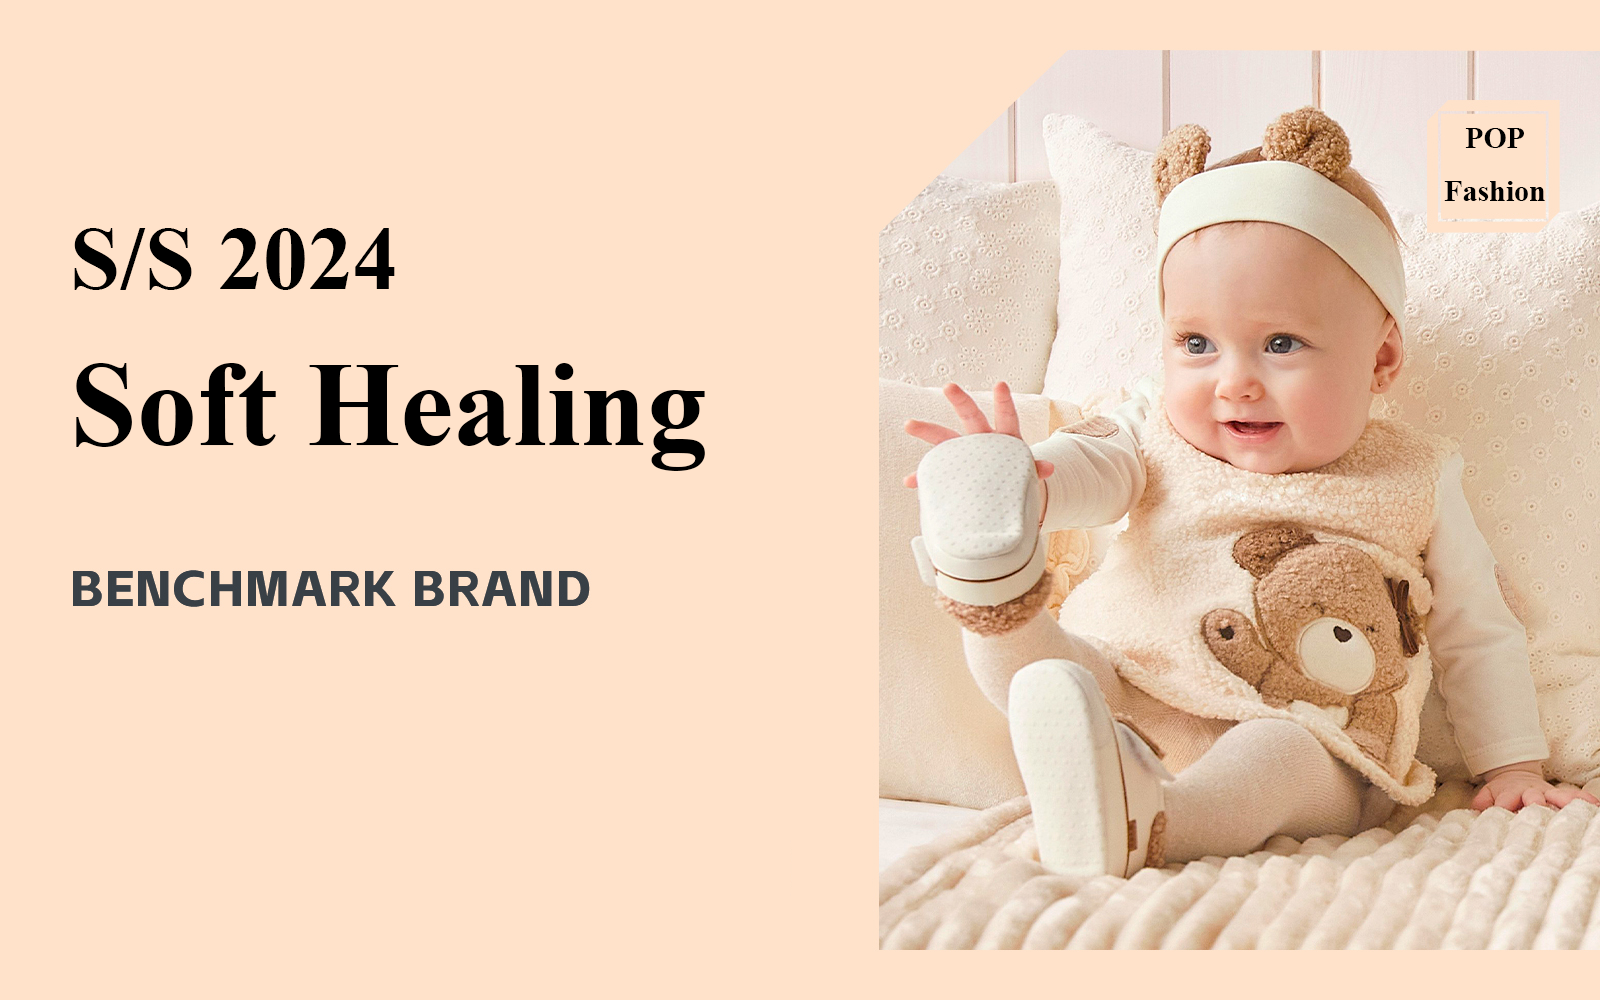 Soft Healing -- The Comprehensive Analysis of Benchmark Infantswear Brand